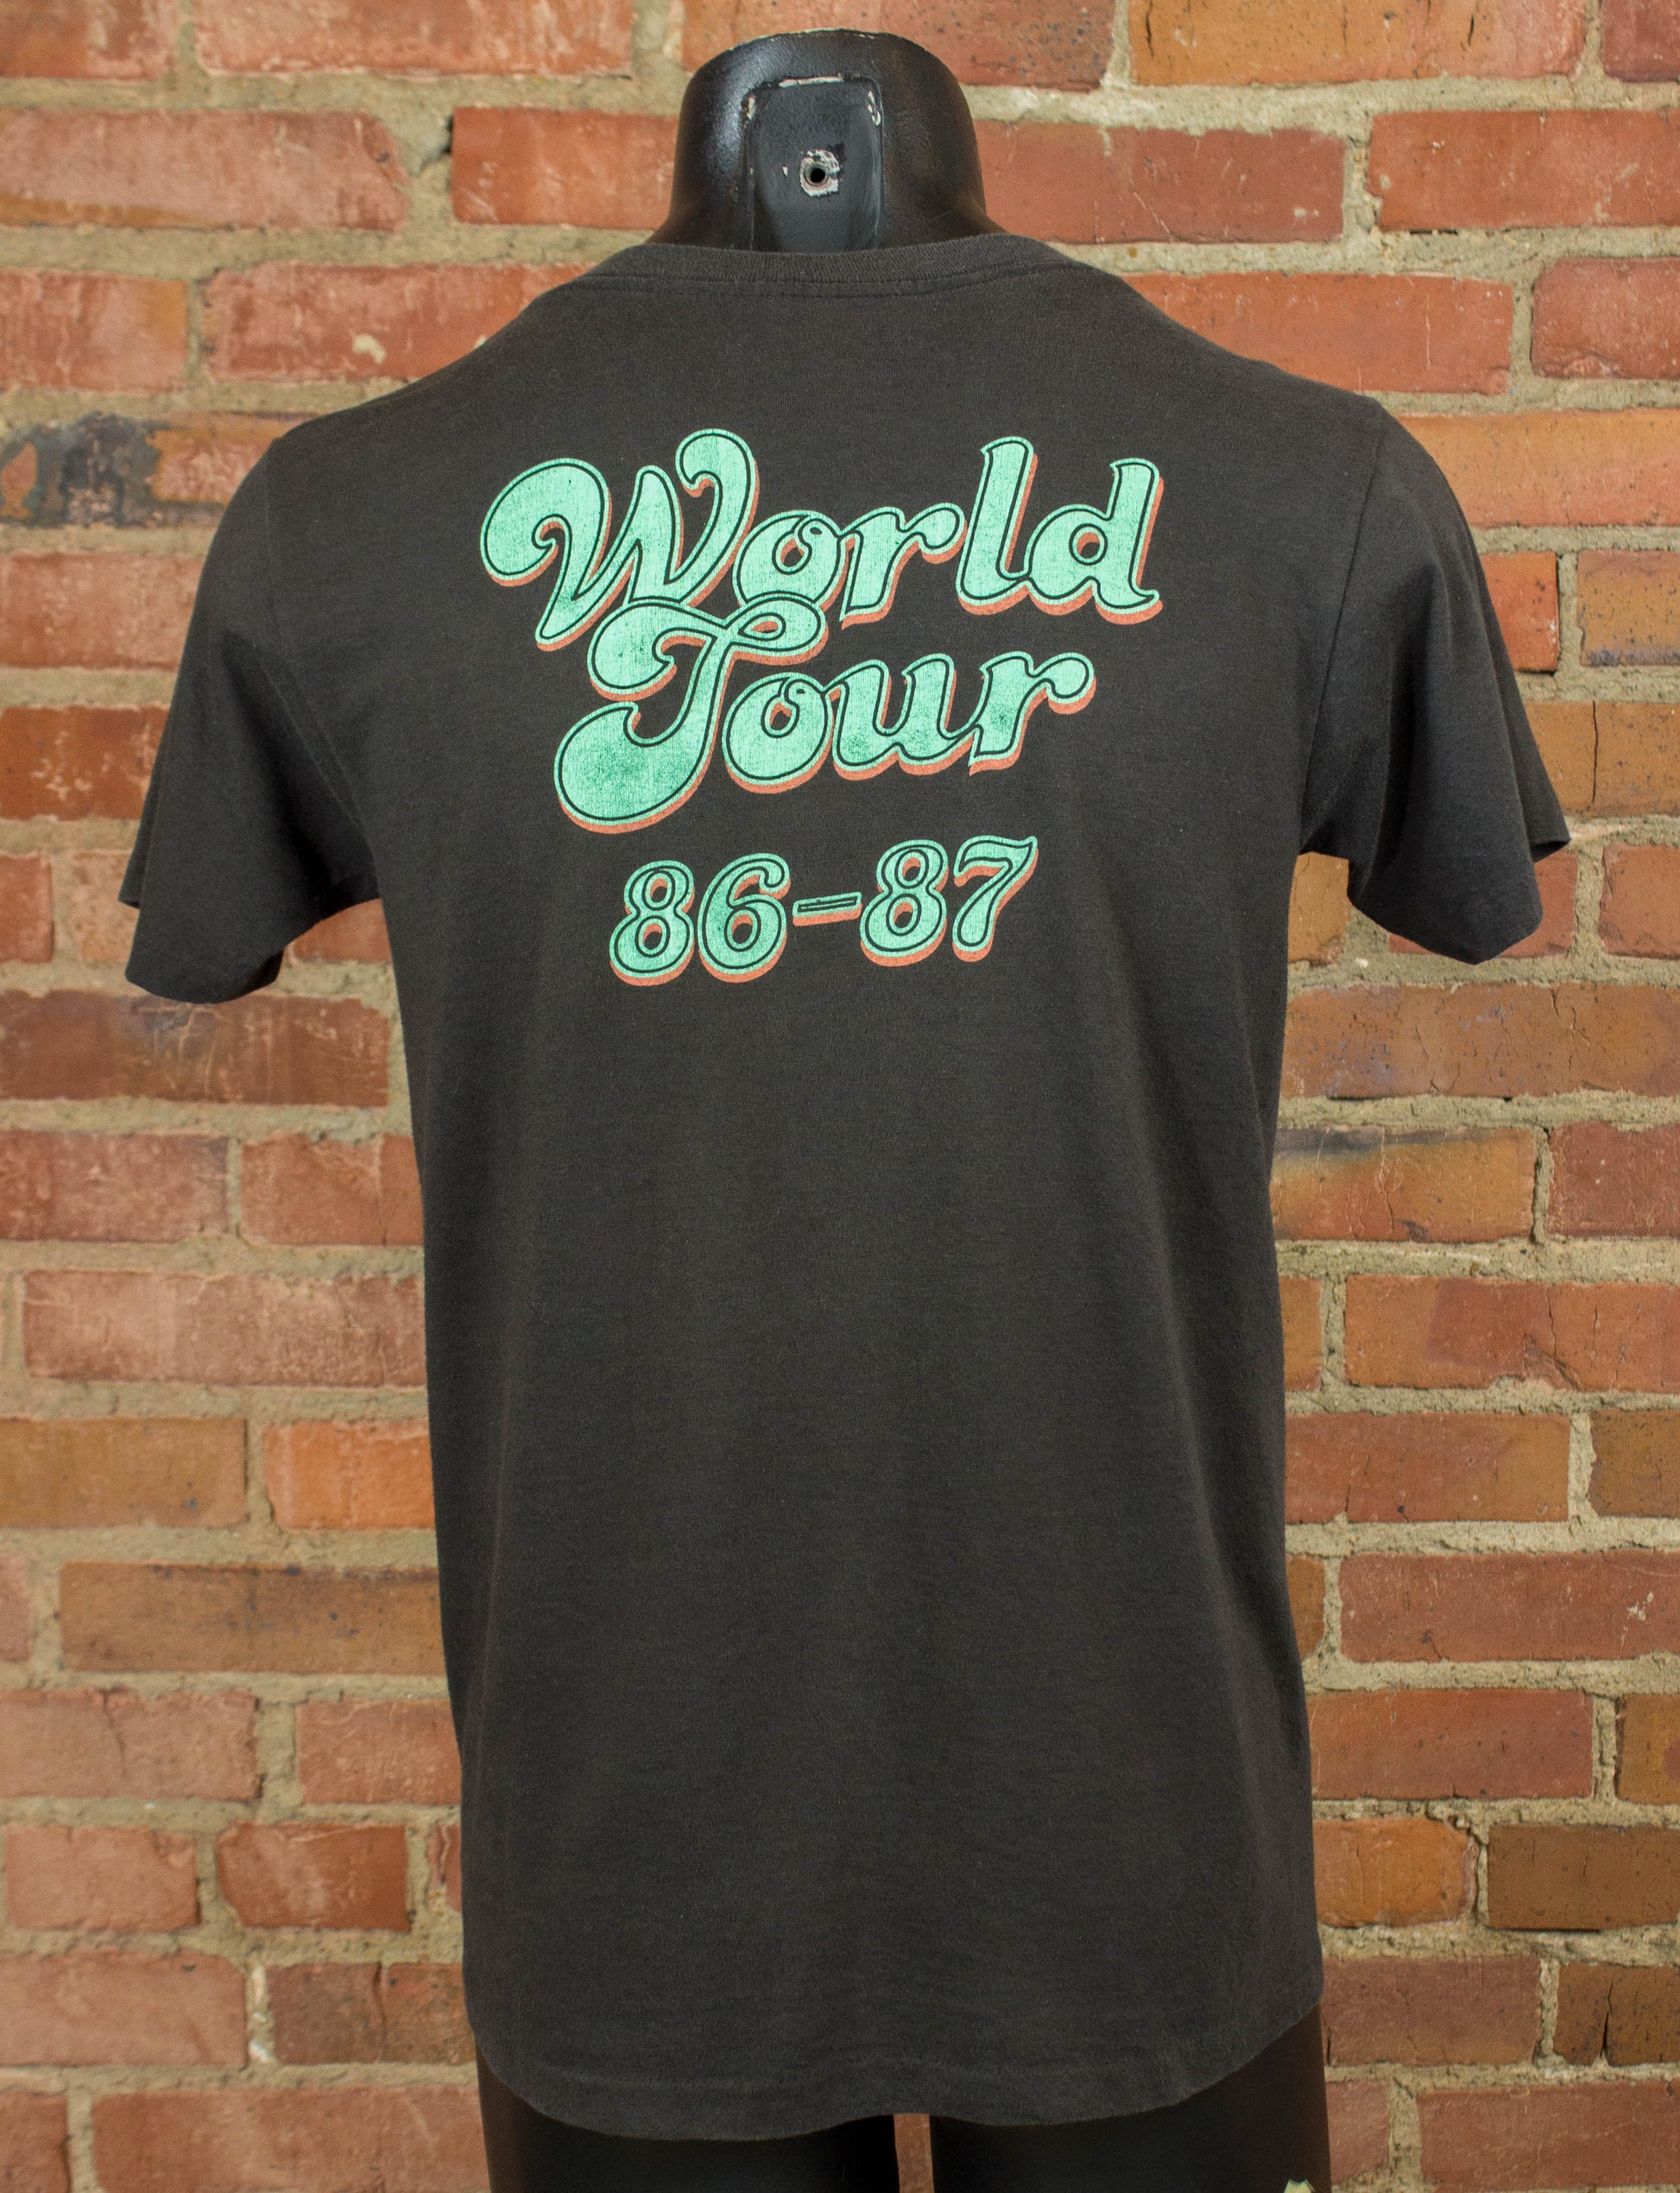 Vintage Chicago Concert T Shirt 1986-87 World Tour Black and Green Medium